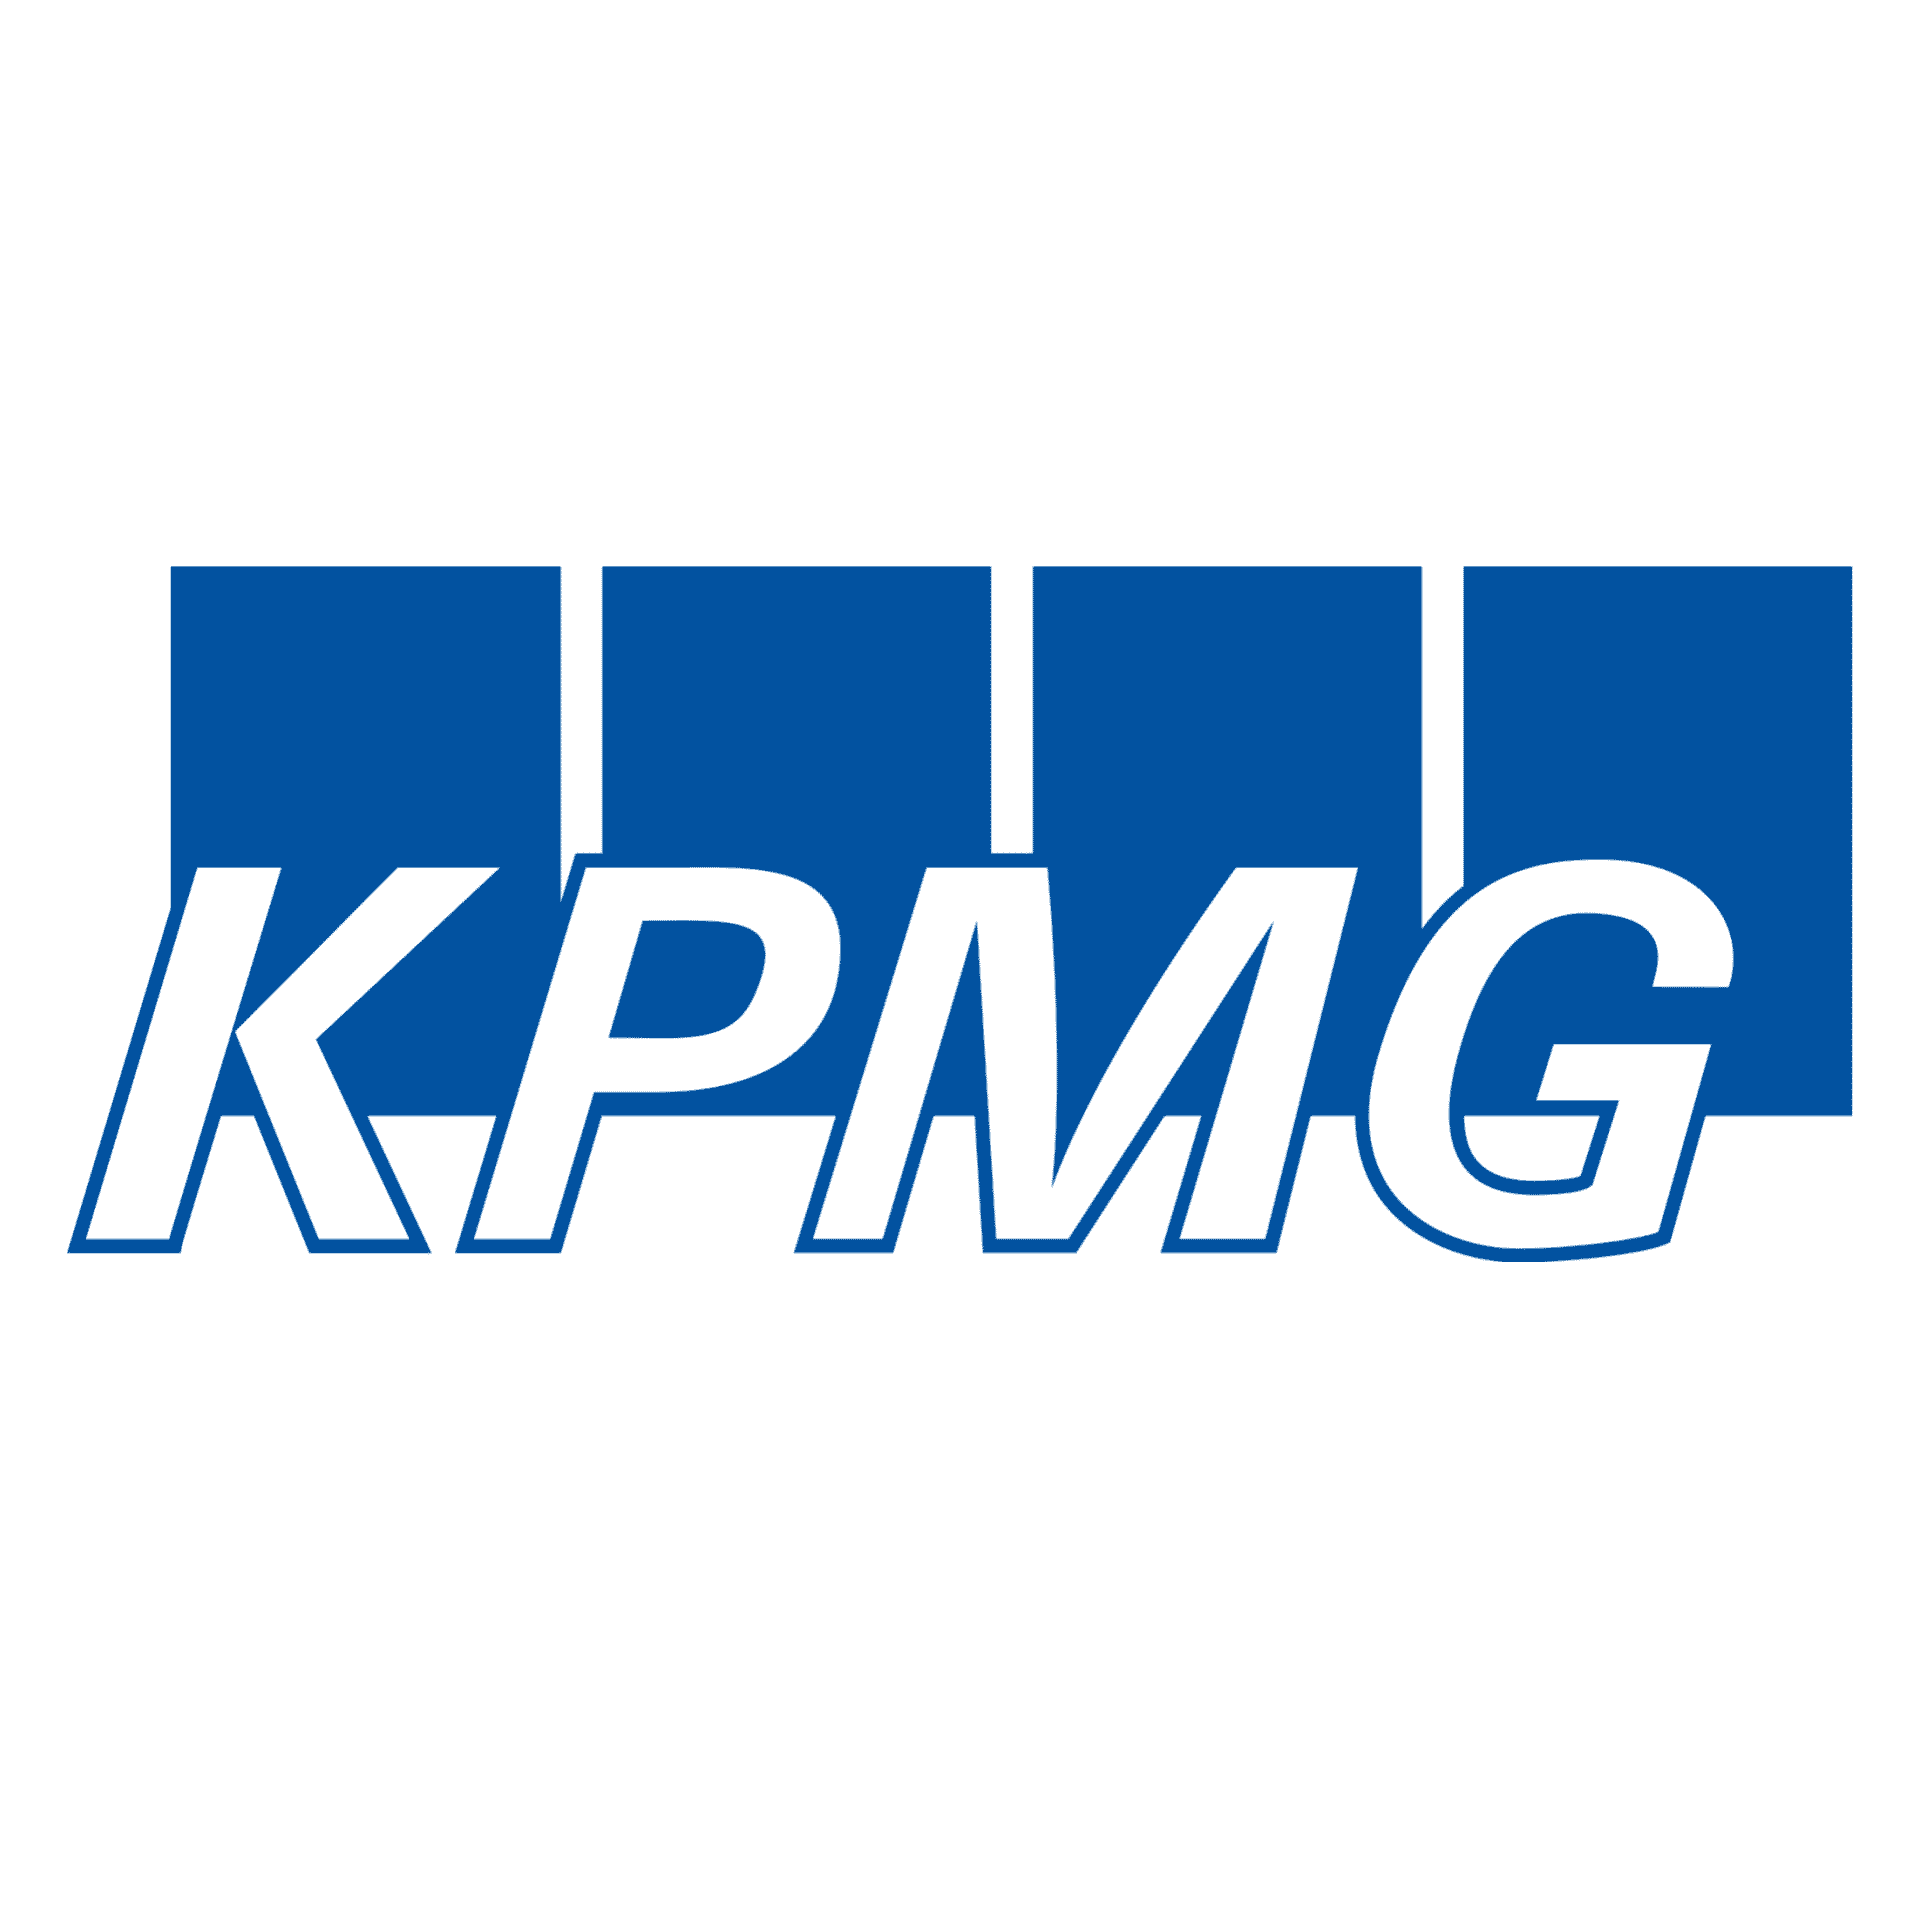 KPMG: Channel Profile & Services